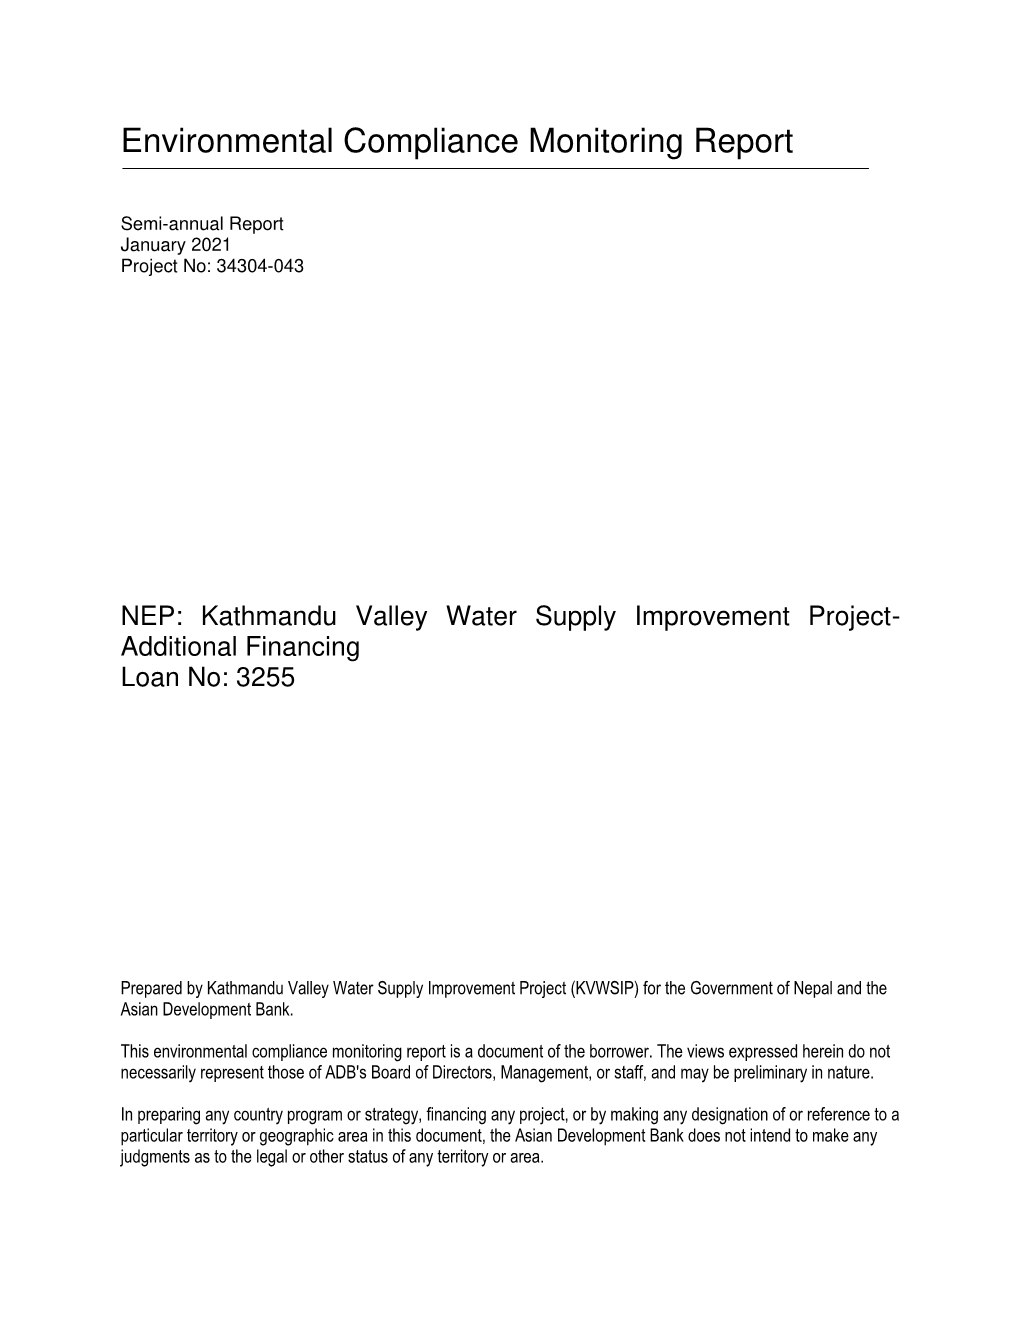 Kathmandu Valley Water Supply Improvement Project- Additional Financing Loan No: 3255